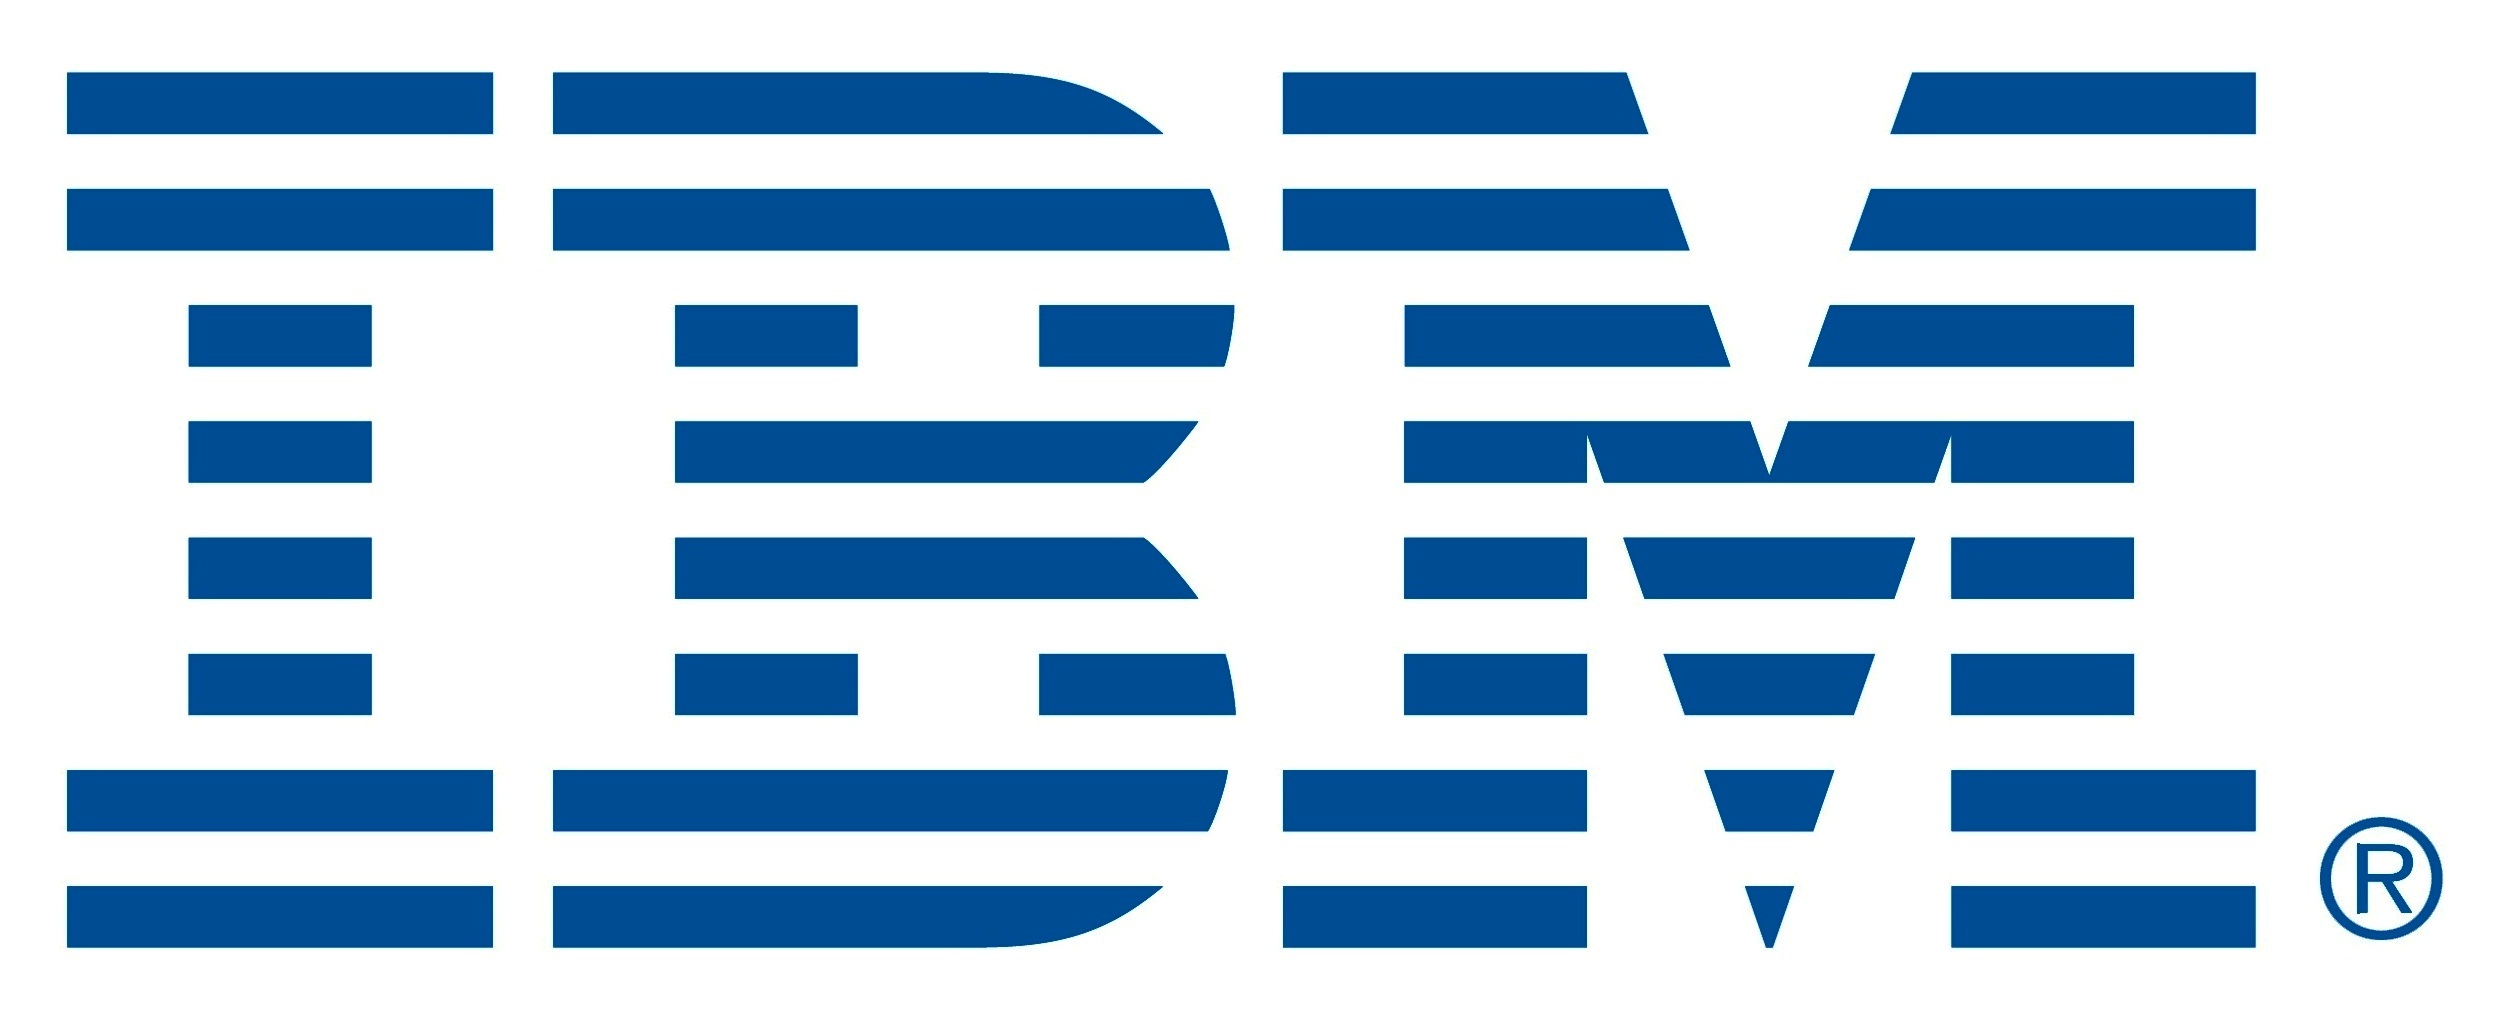 IBM logo - Tech History Today